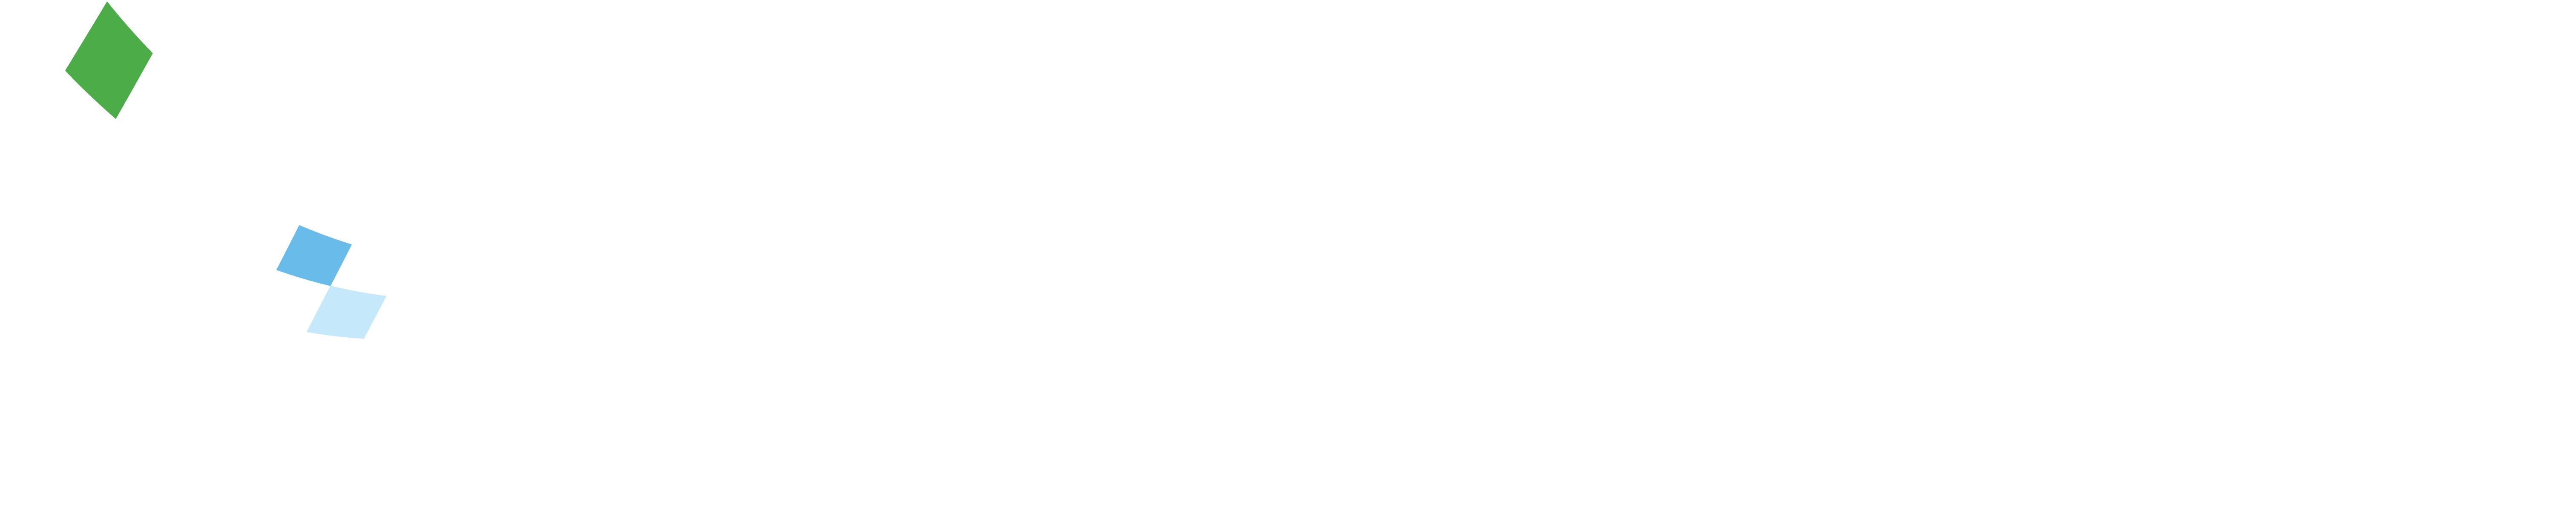 scancare-logo-light